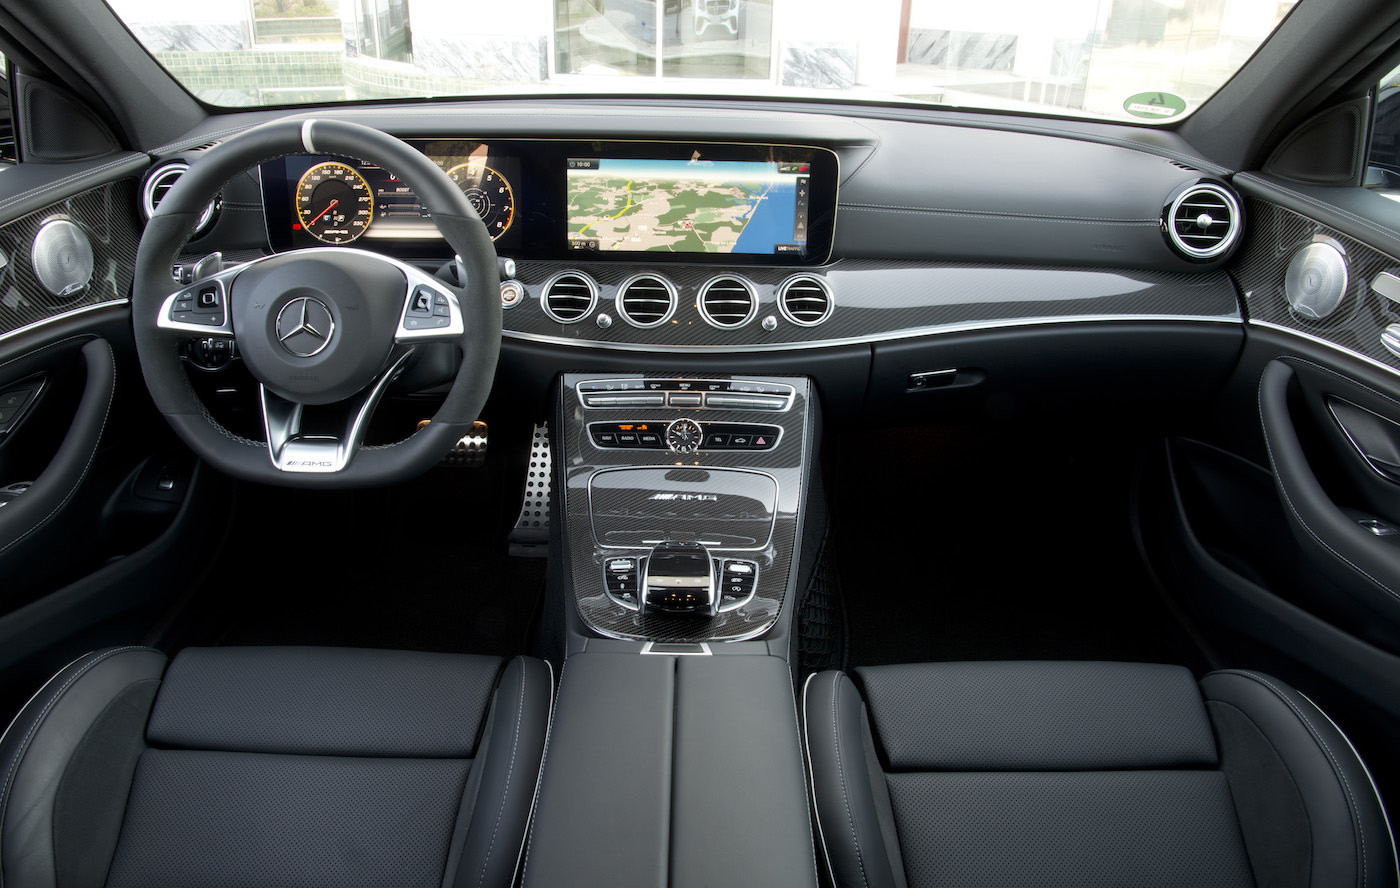 Performance-Limousine: Mit dem neuen Mercedes-AMG E63 S 4MATIC+ durch Portugal 14